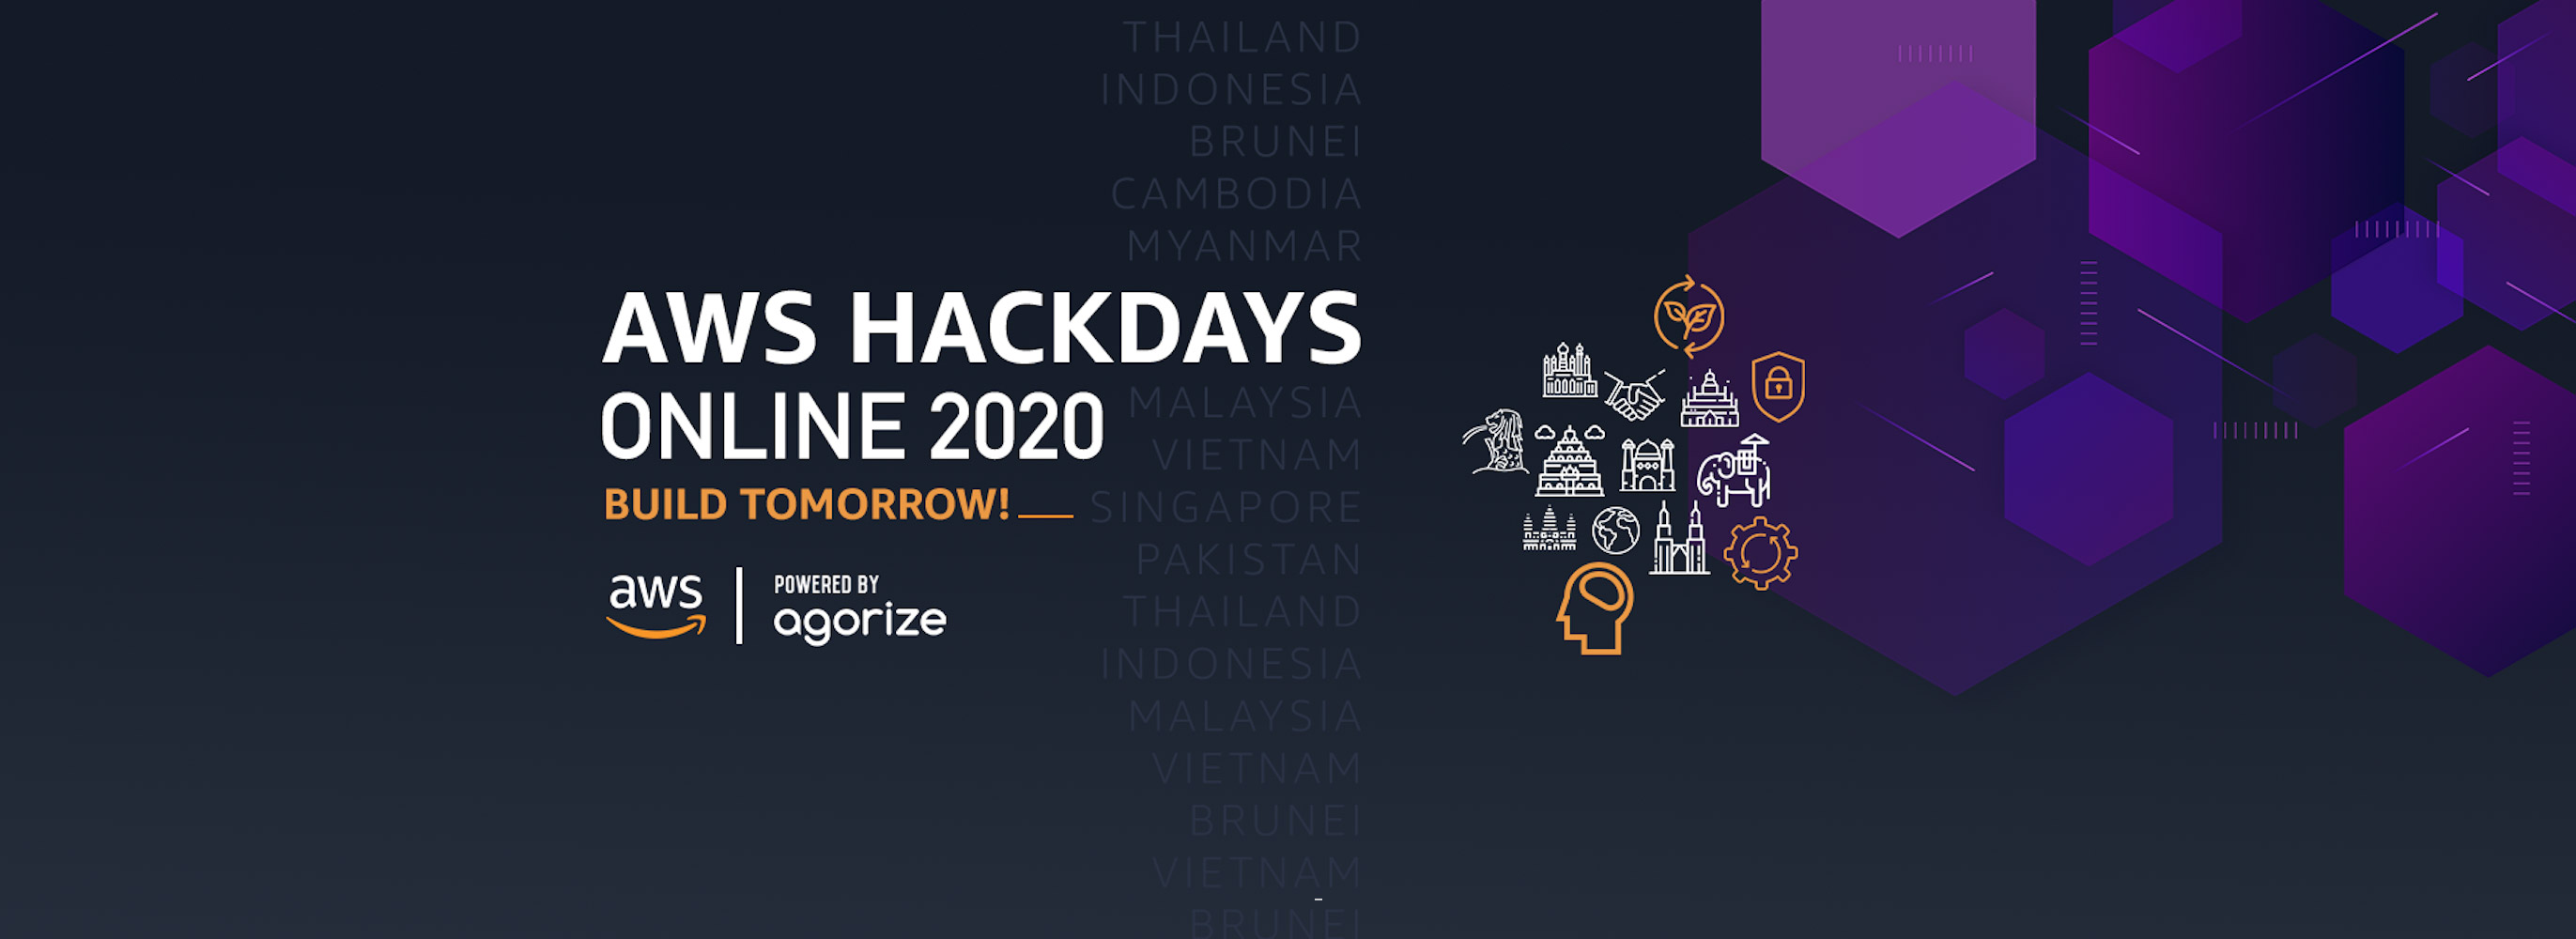 AWS Hackdays Online 2020